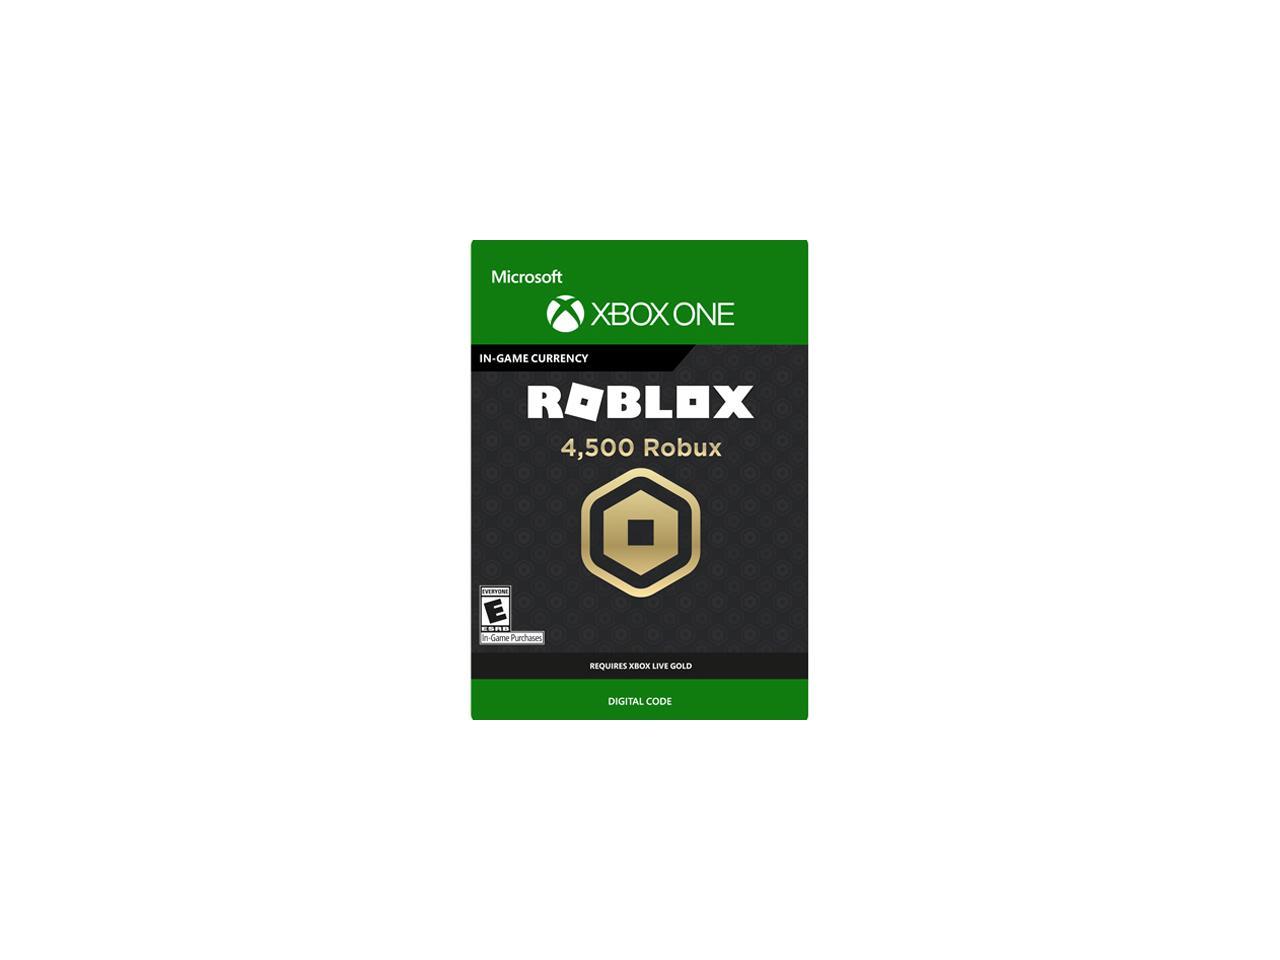 4 500 Robux For Xbox One Digital Code Newegg Com - boombox roblox xbox one